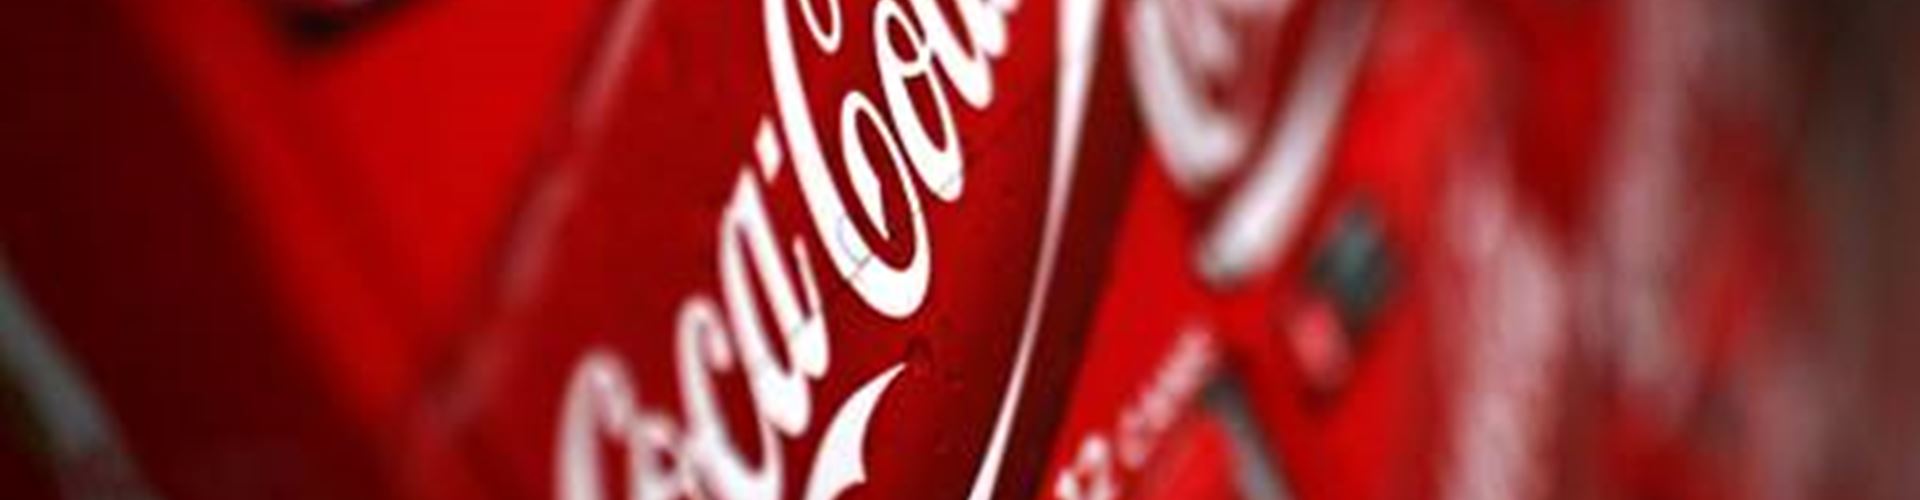 Business magnate Warren Buffett ‘not buying Coca-Cola’